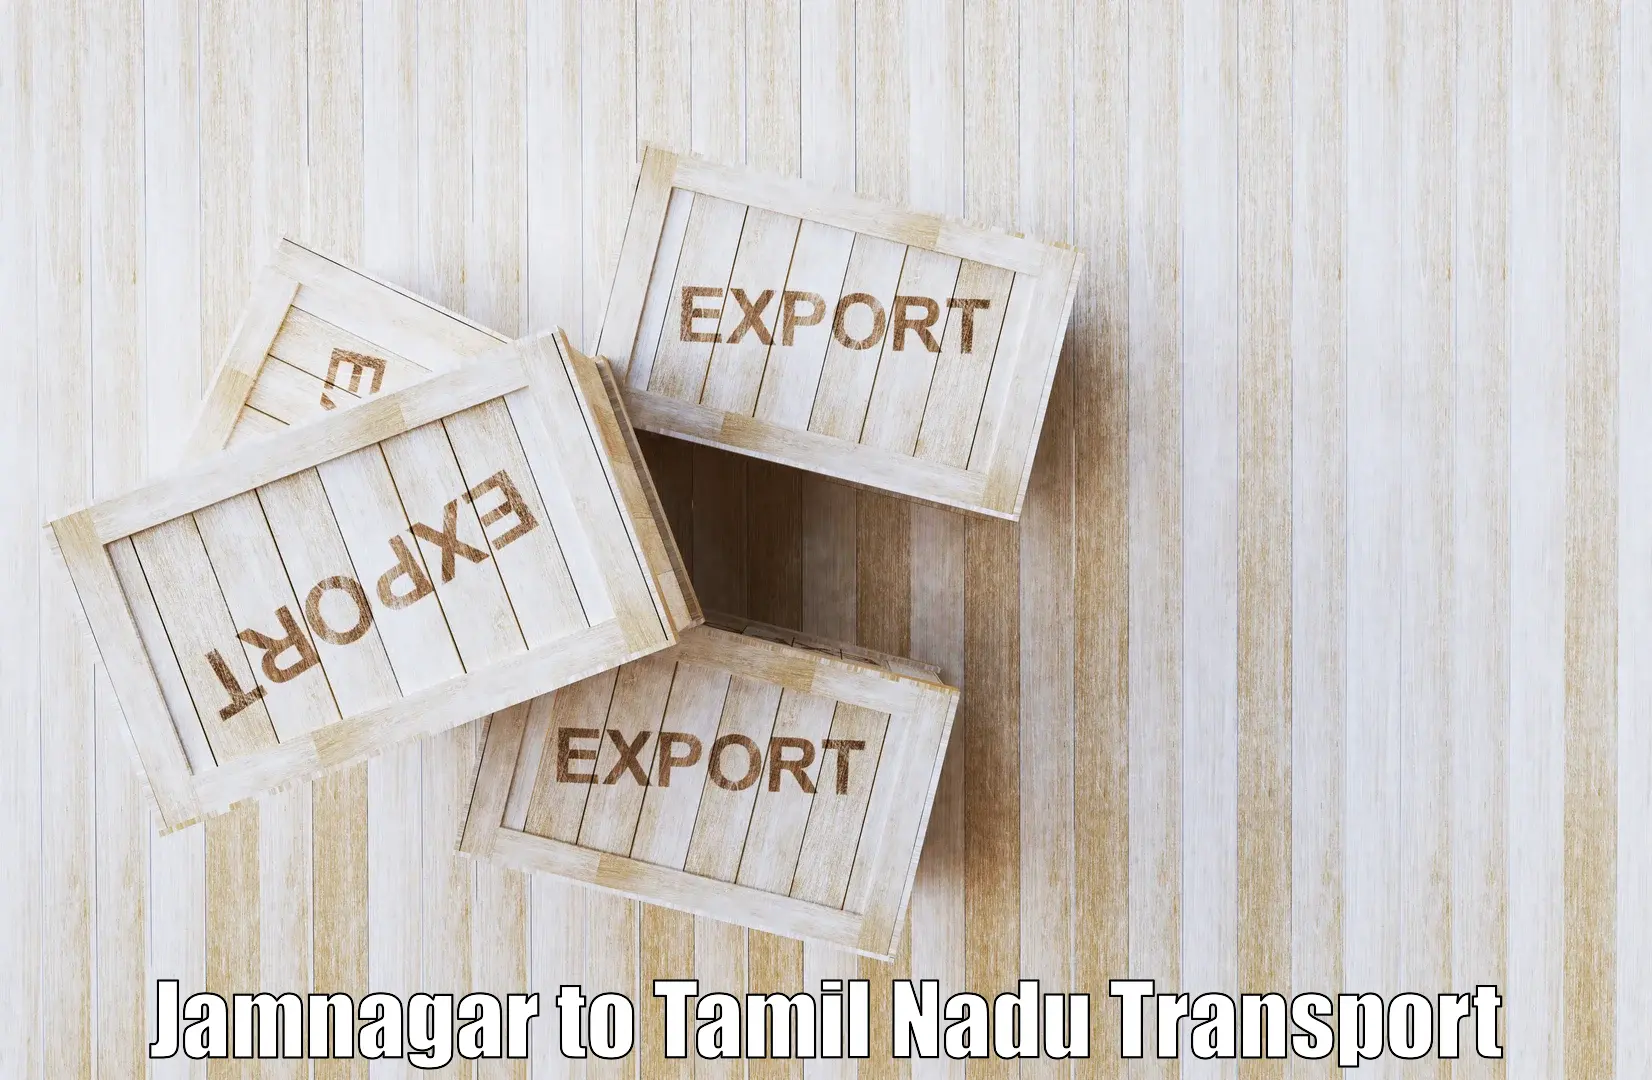 Daily transport service in Jamnagar to Tamil Nadu